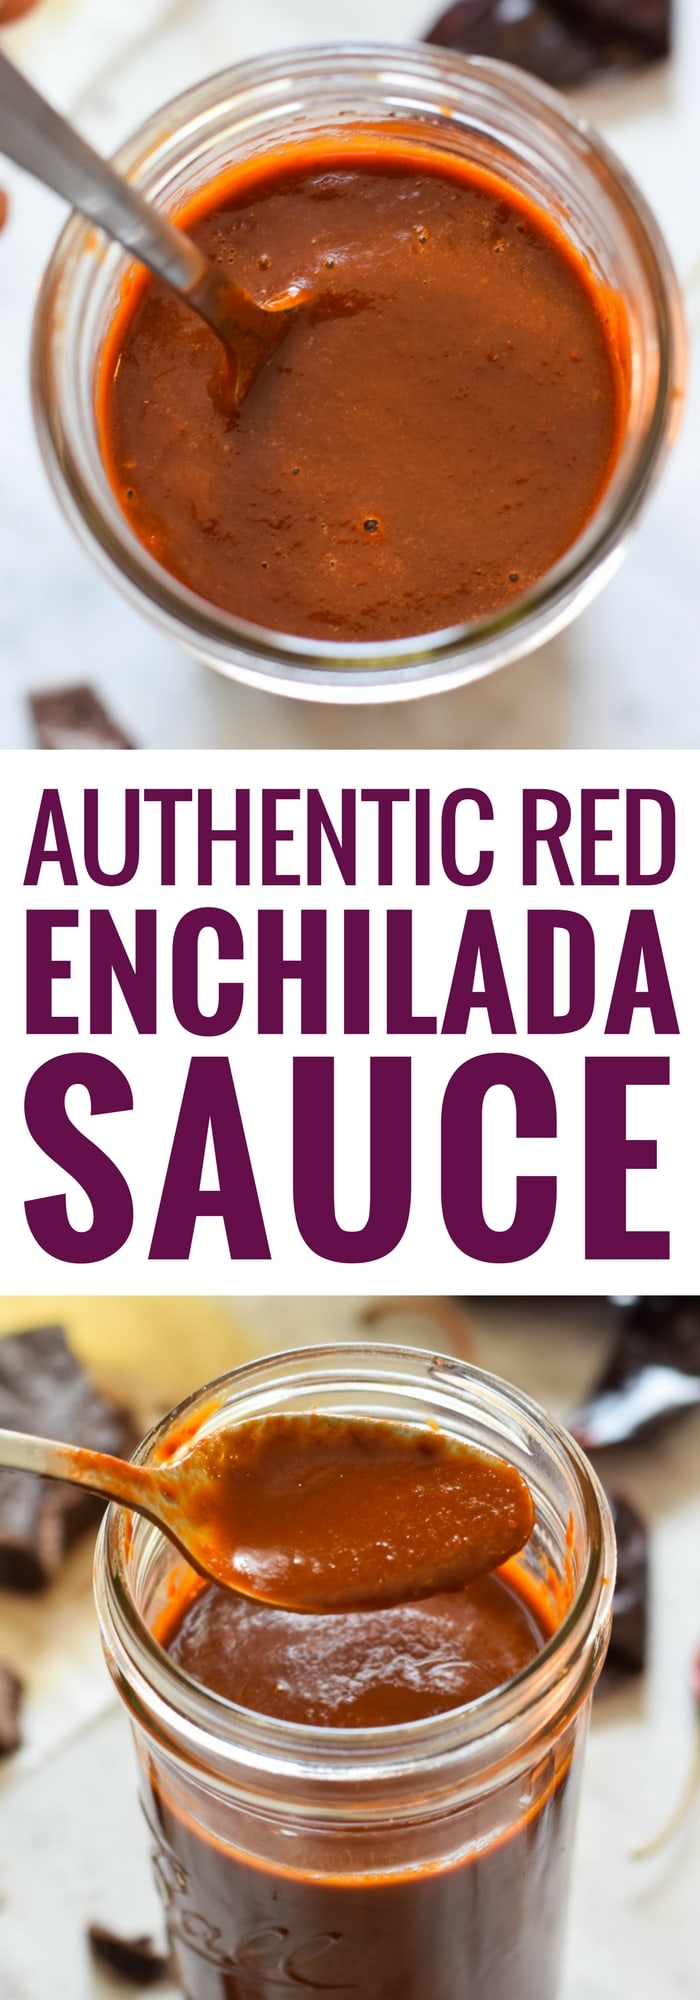 authentic basic red enchilada sauce